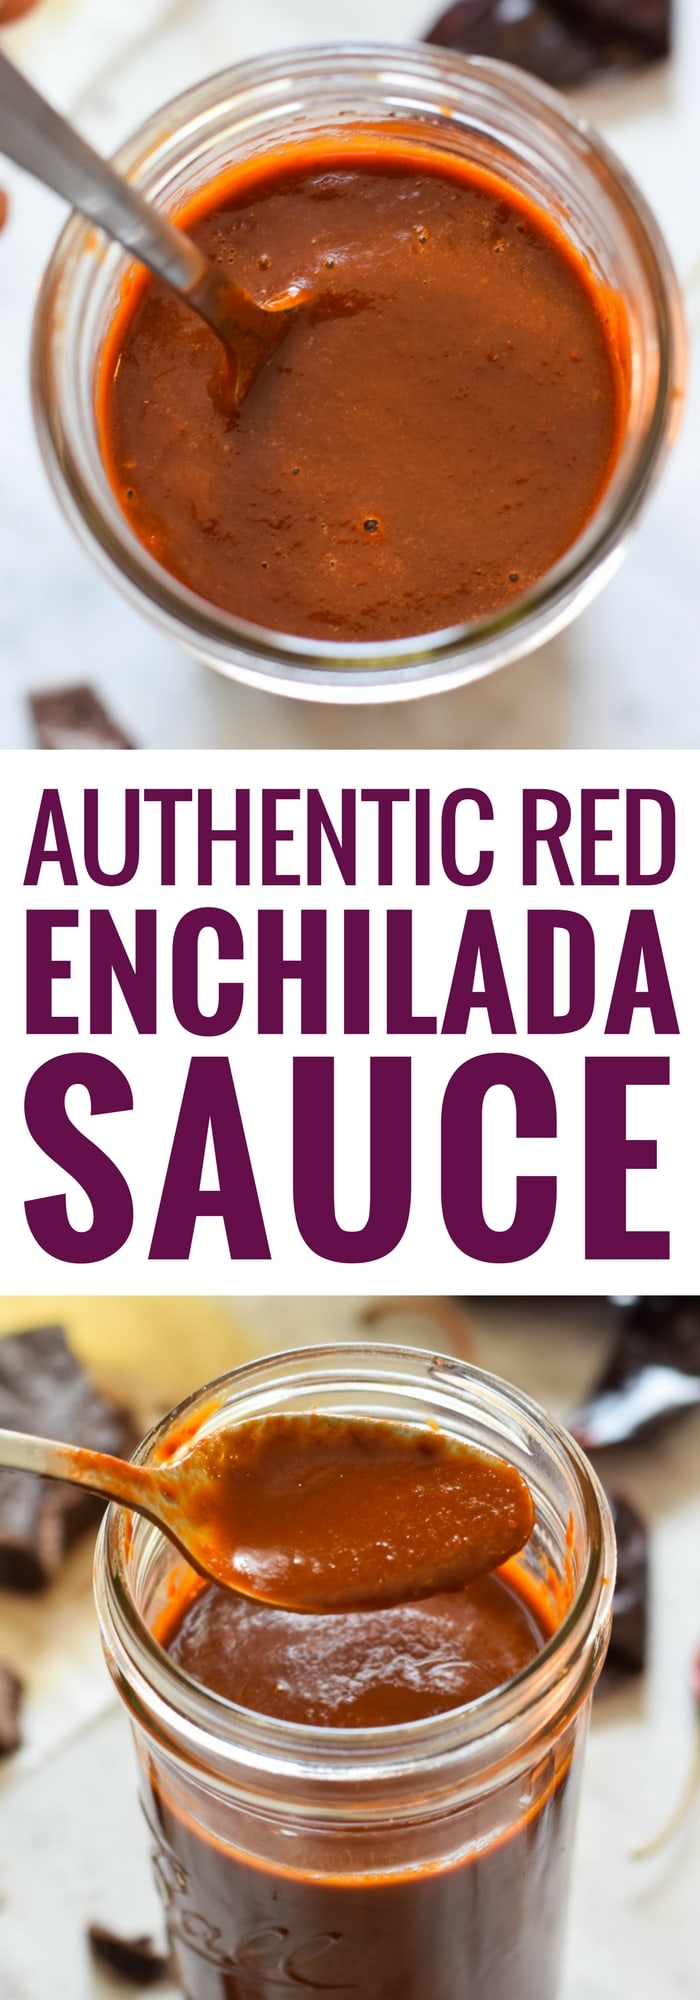 authentic basic red enchilada sauce